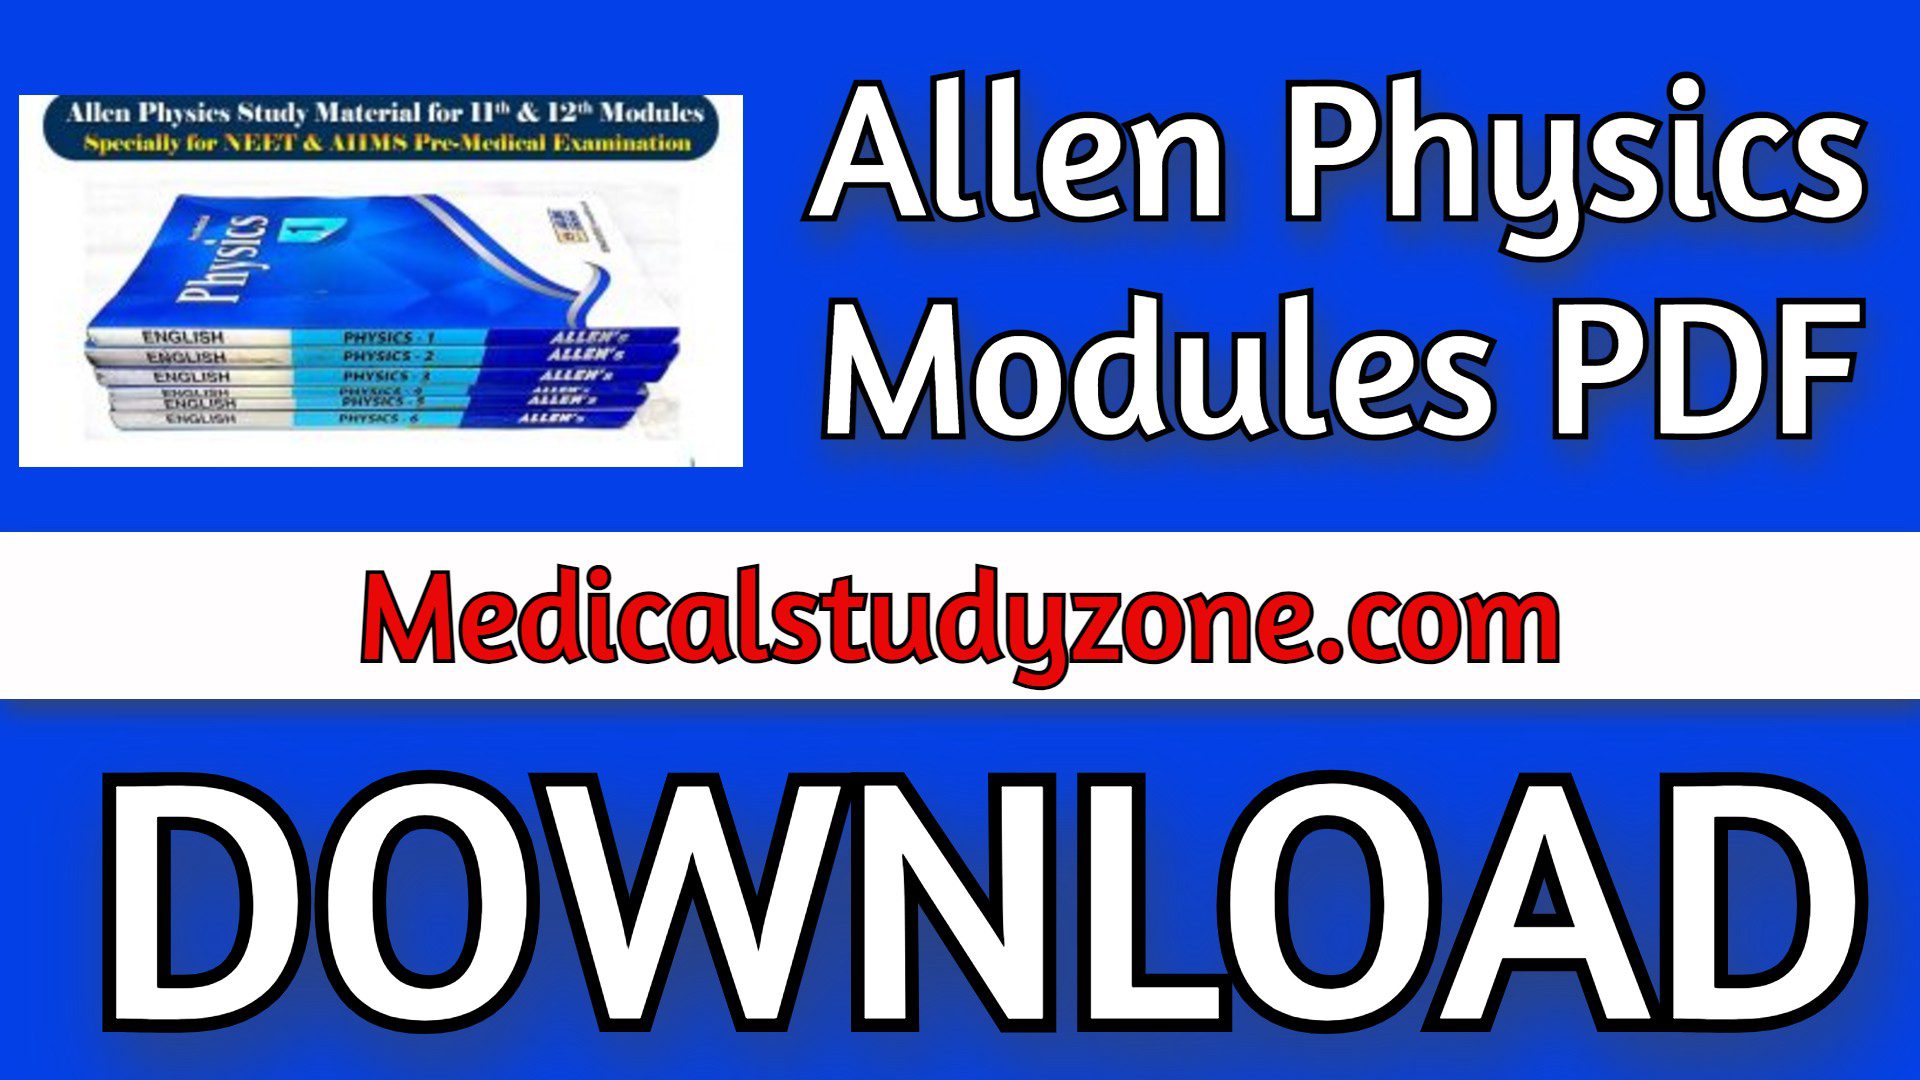 Allen Physics Modules PDF 2021 Free Download